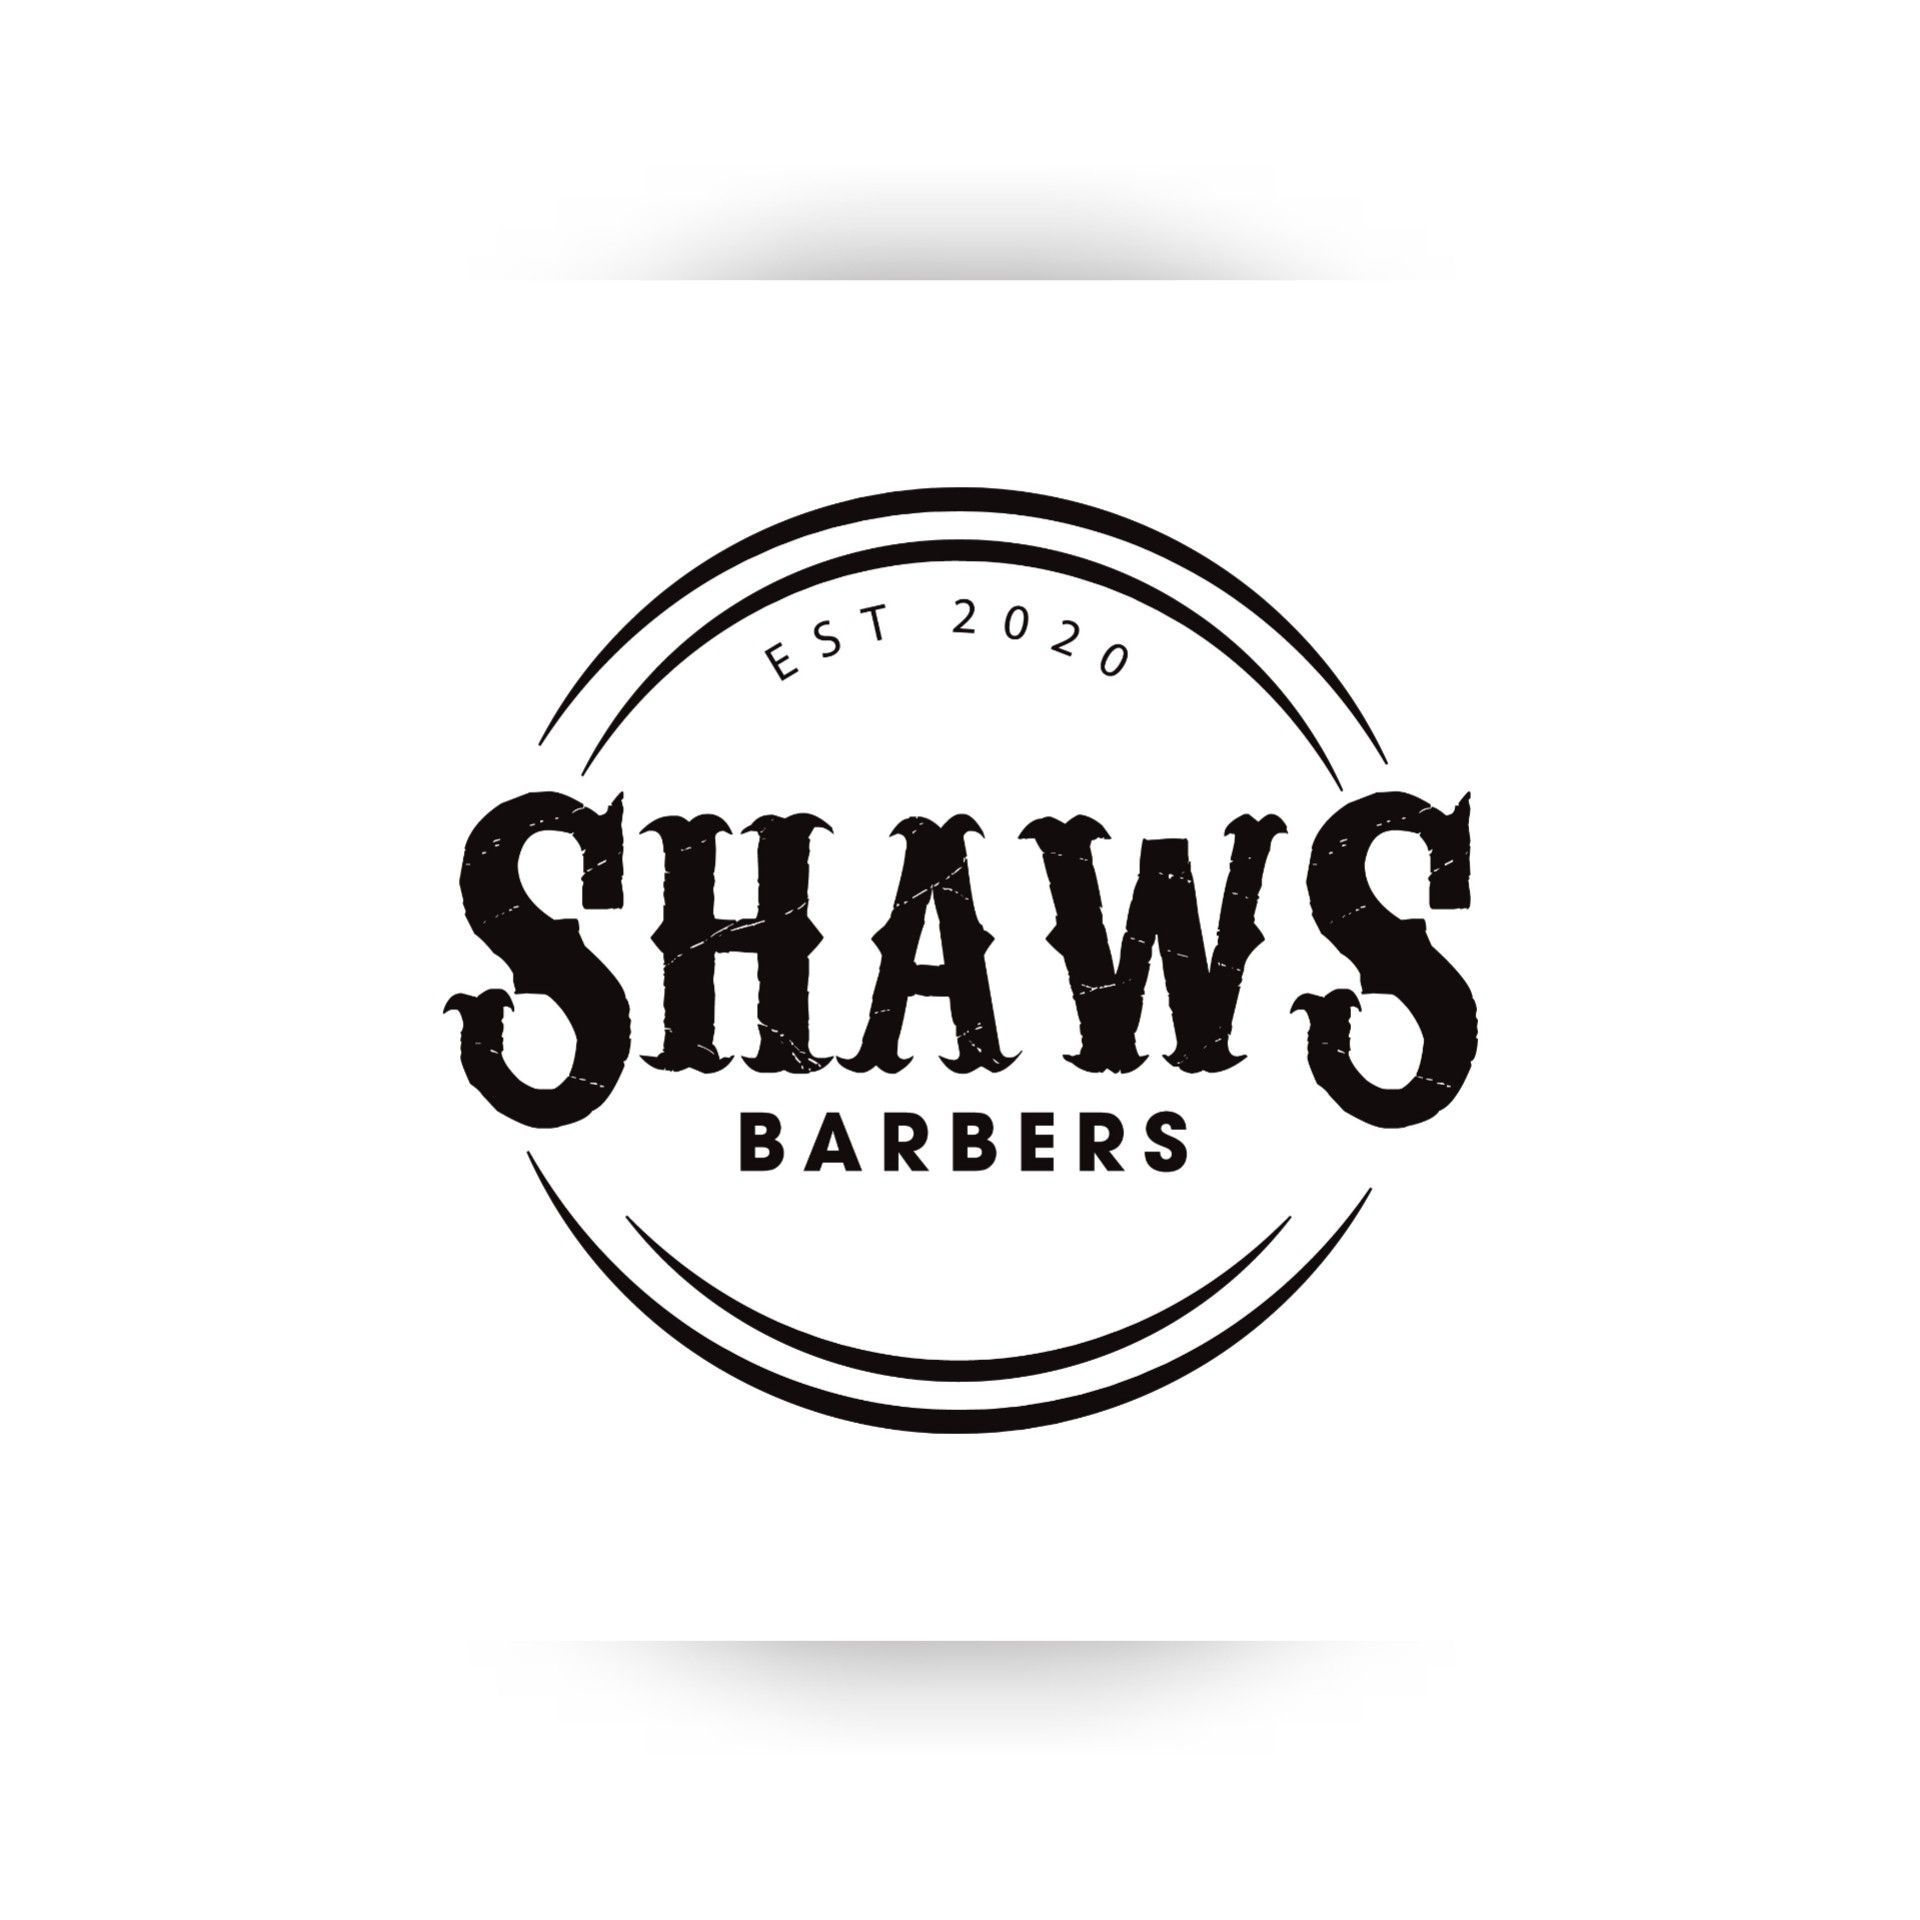 Shaws Barbers, 1 McArthur Street, G43 1RU, Glasgow